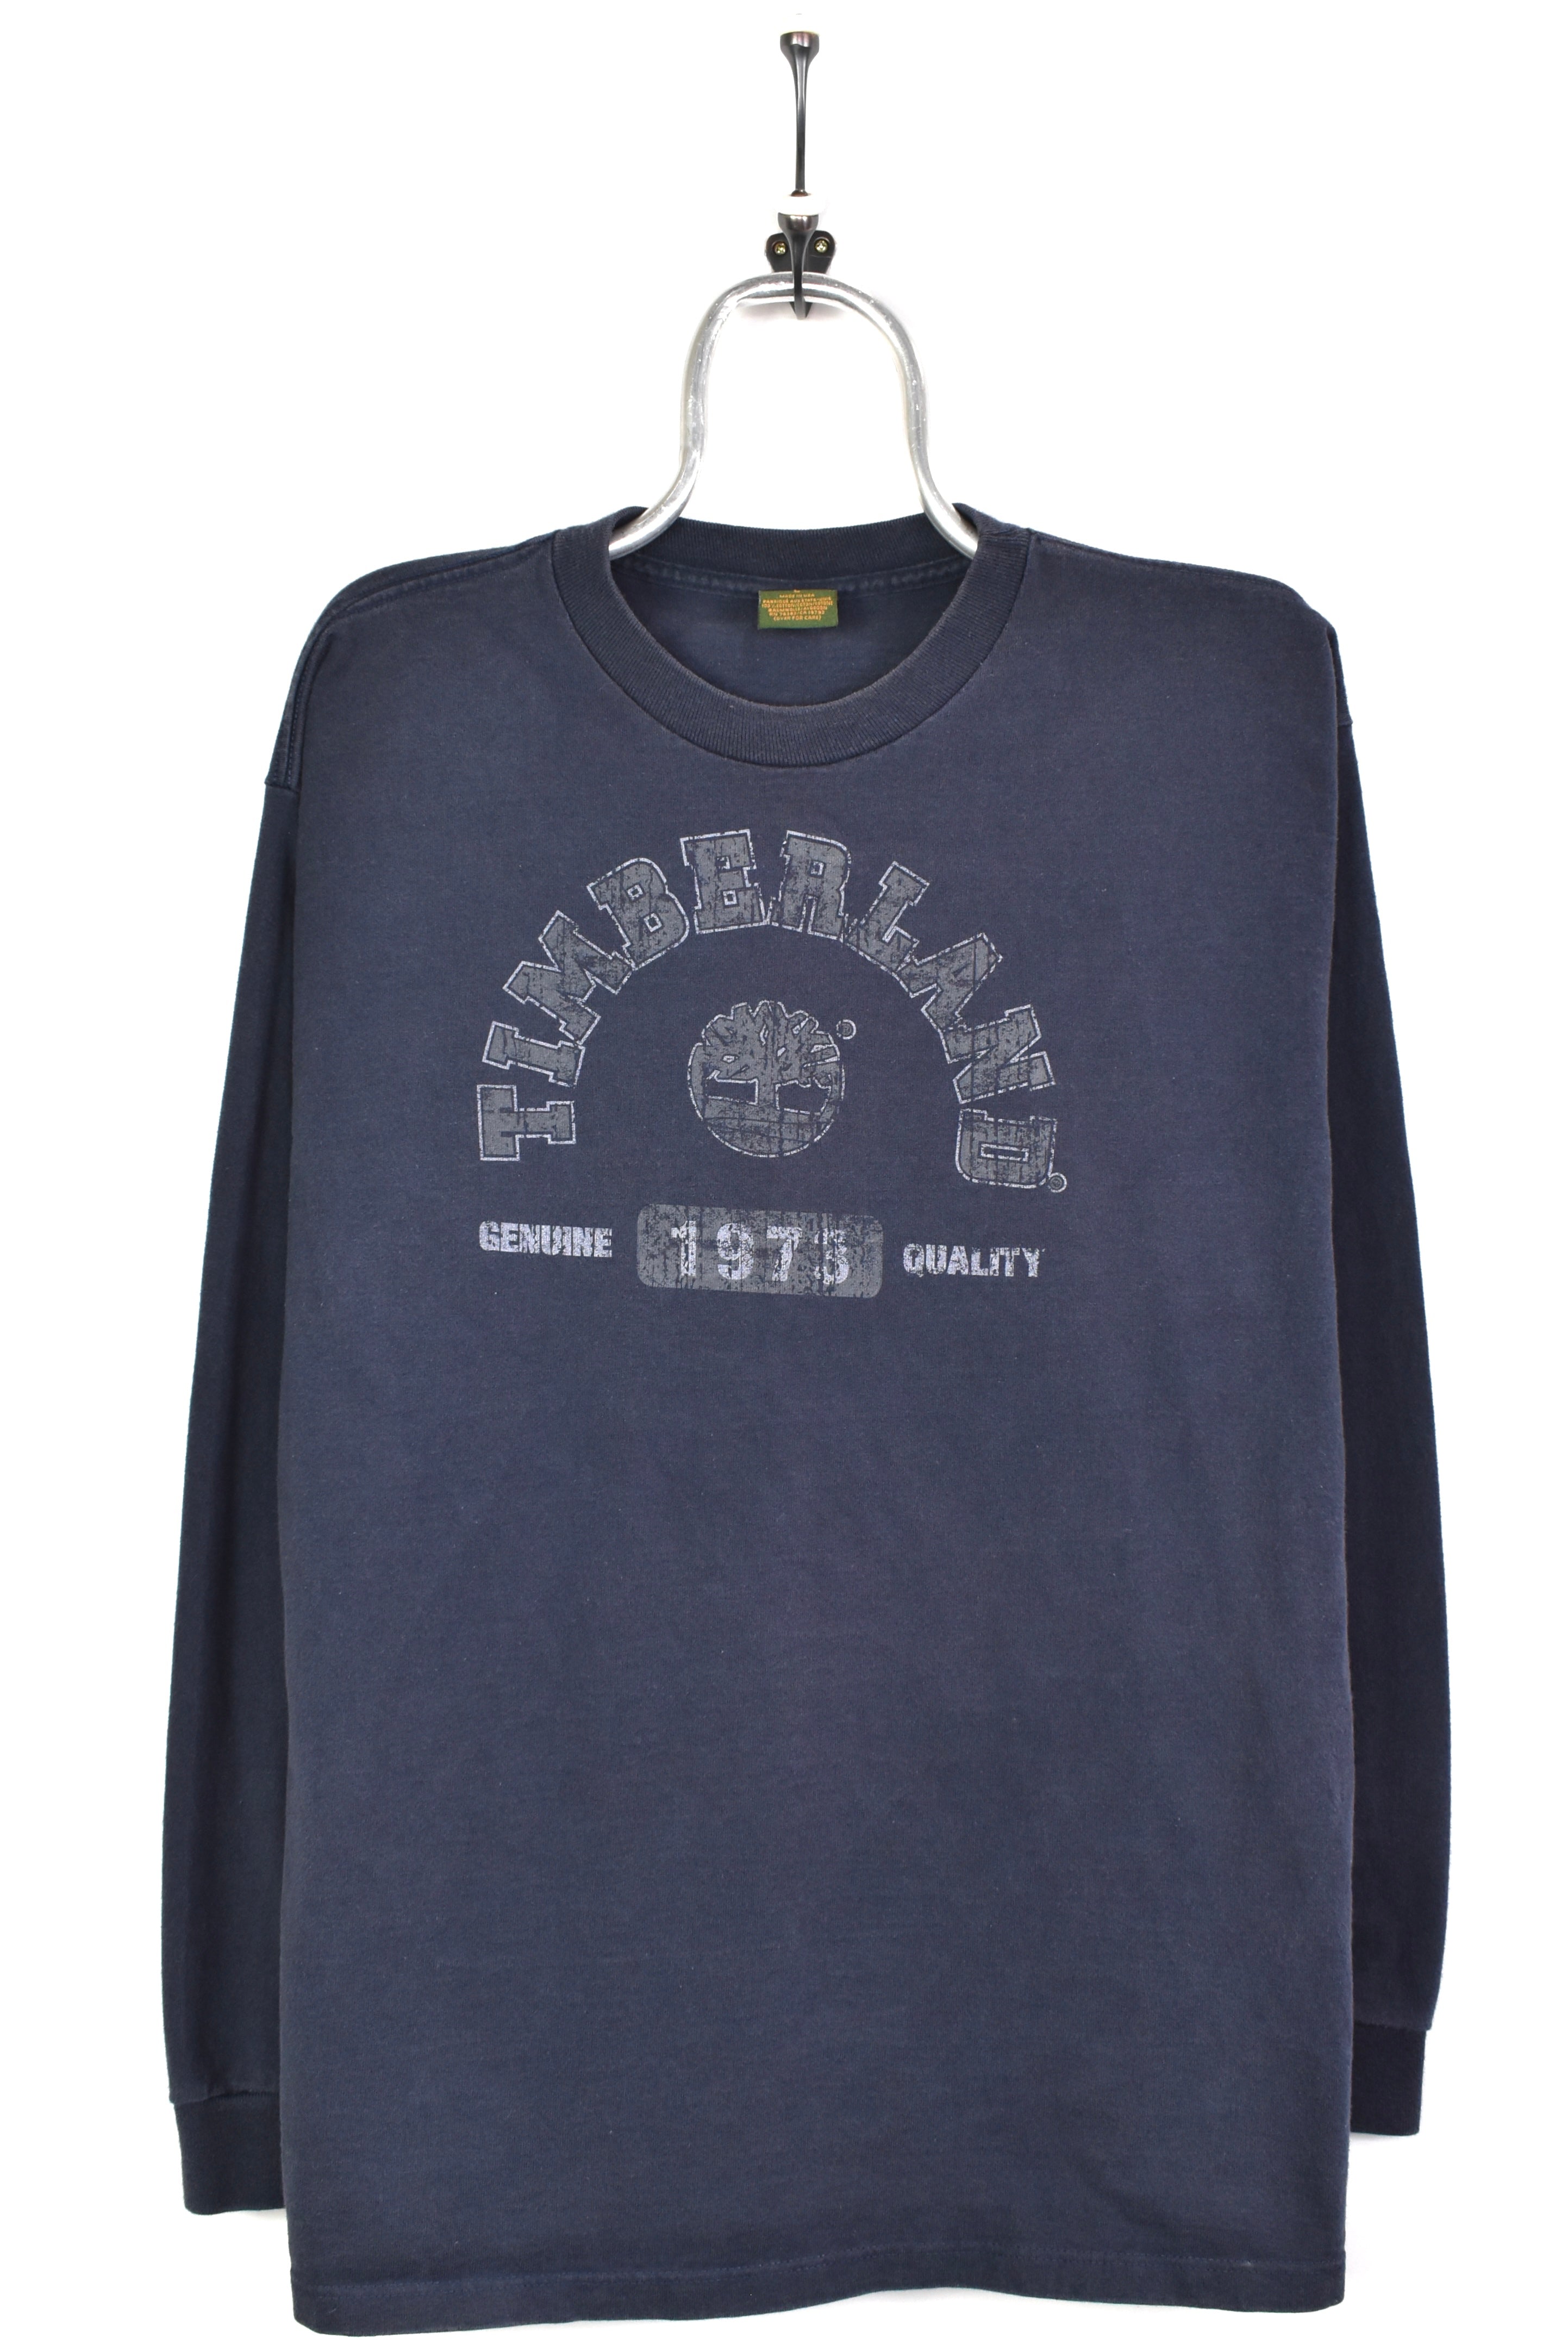 Vintage Timberland shirt, long sleeve navy blue graphic tee - AU L TIMBERLAND